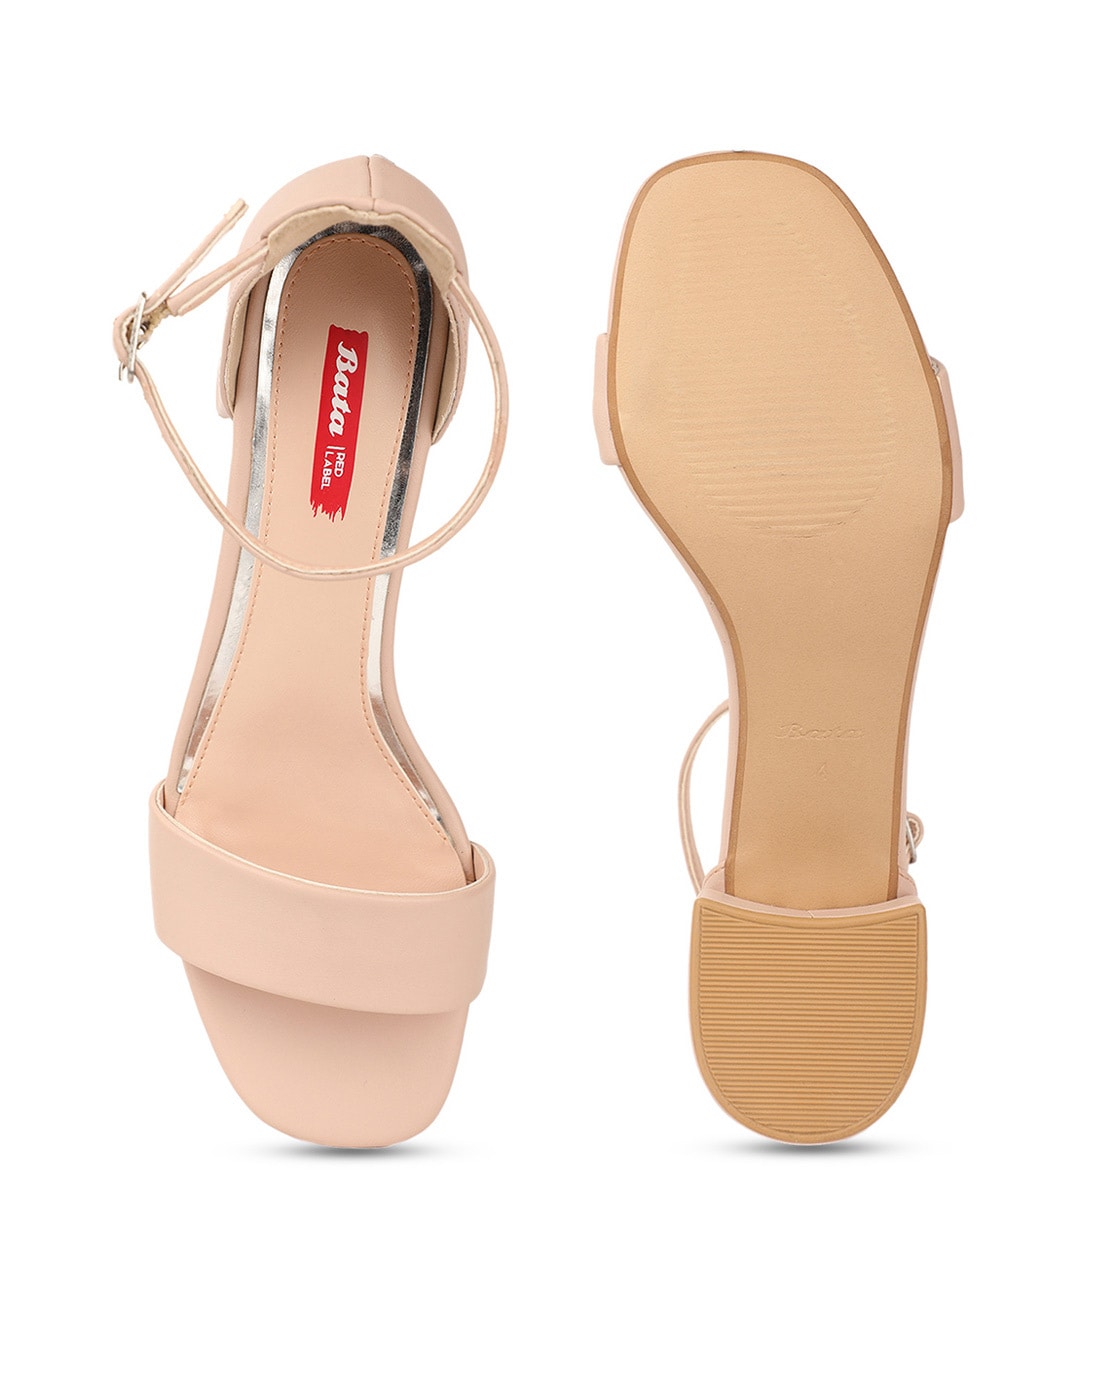 Women Bata Sandals - Buy Women Bata Sandals online in India